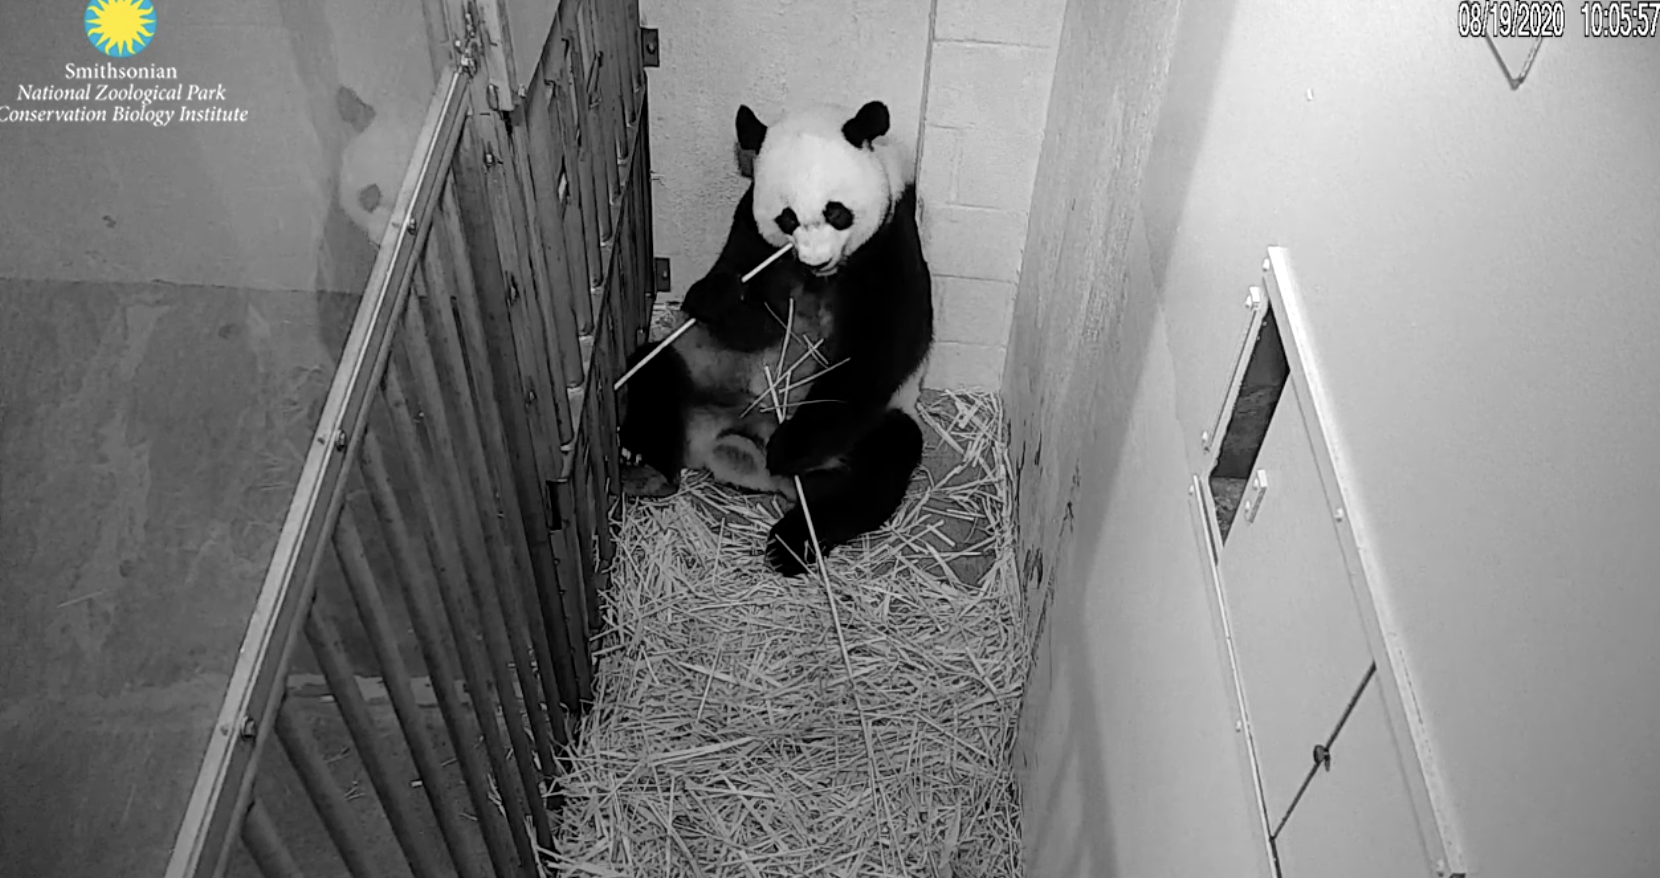 LIVE CAM: National Zoo awaits birth of pandemic panda cub